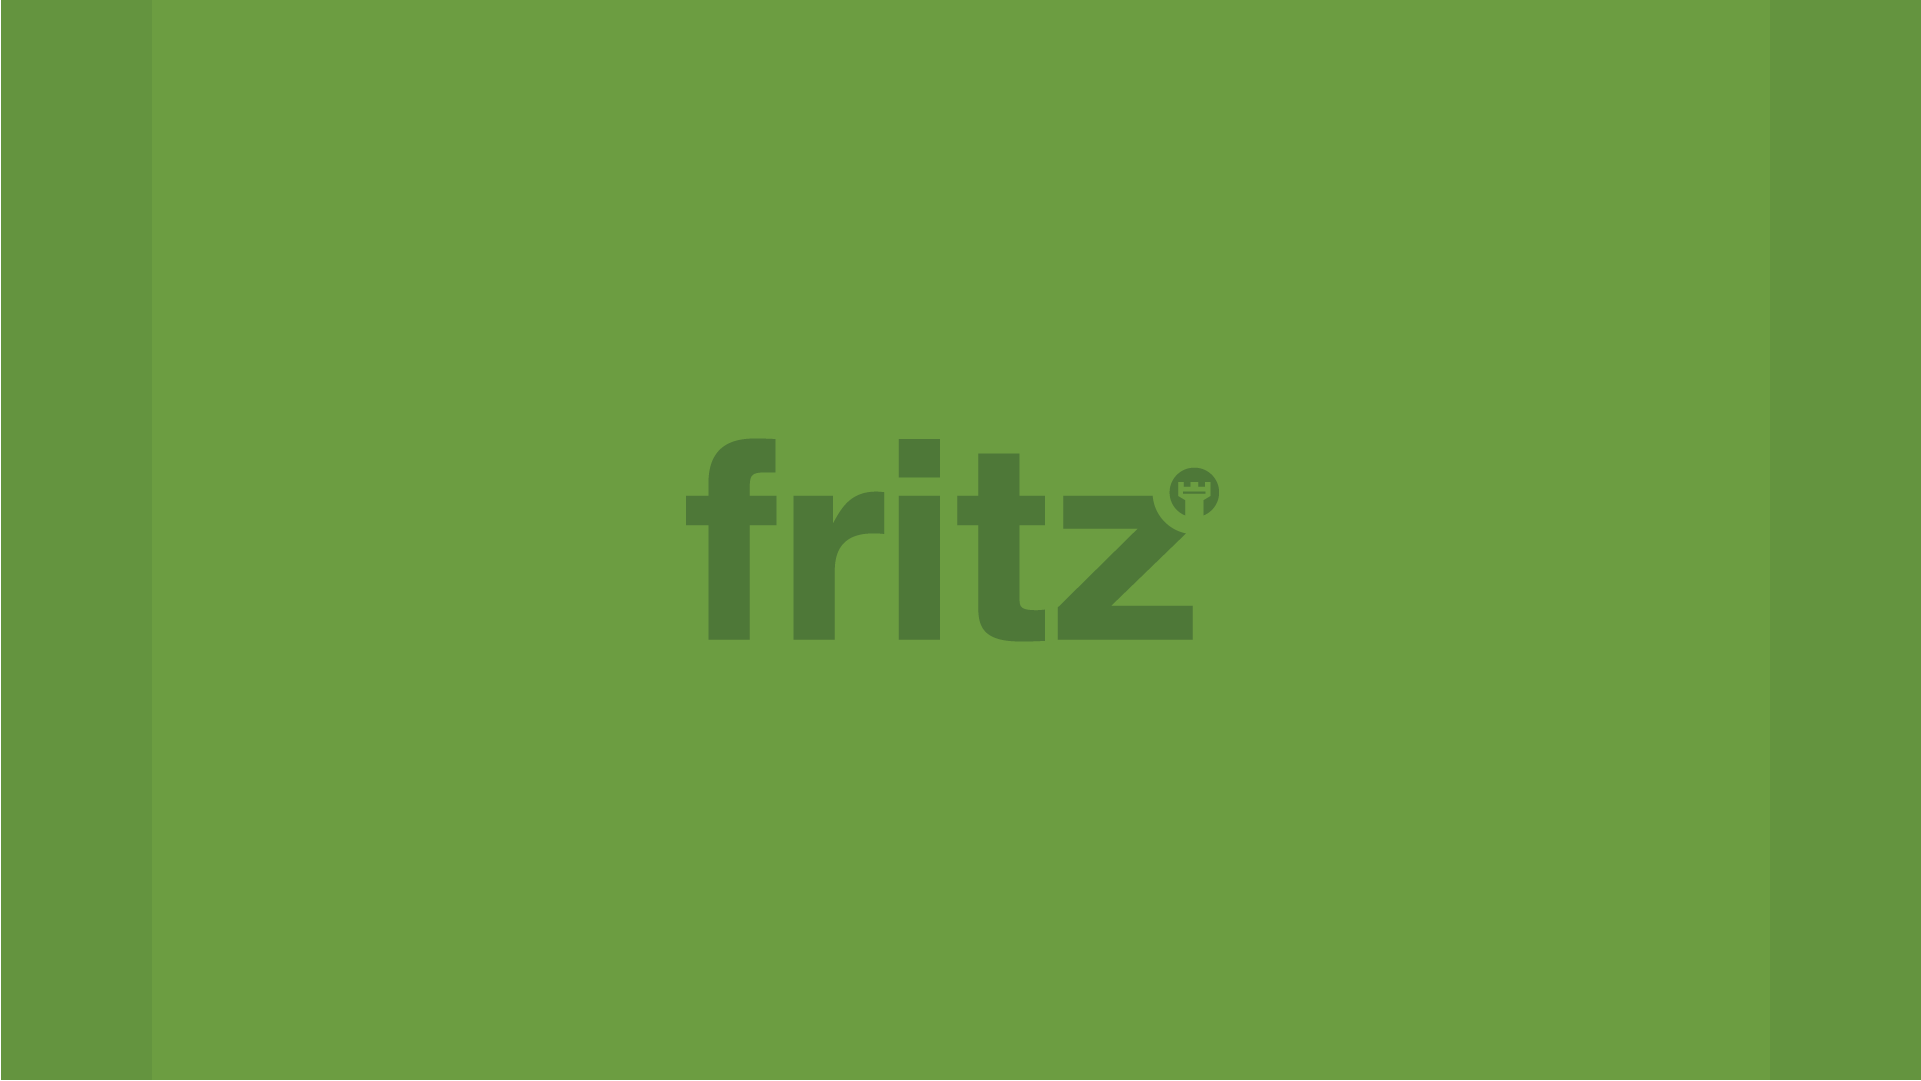 deep fritz 12 free download full version